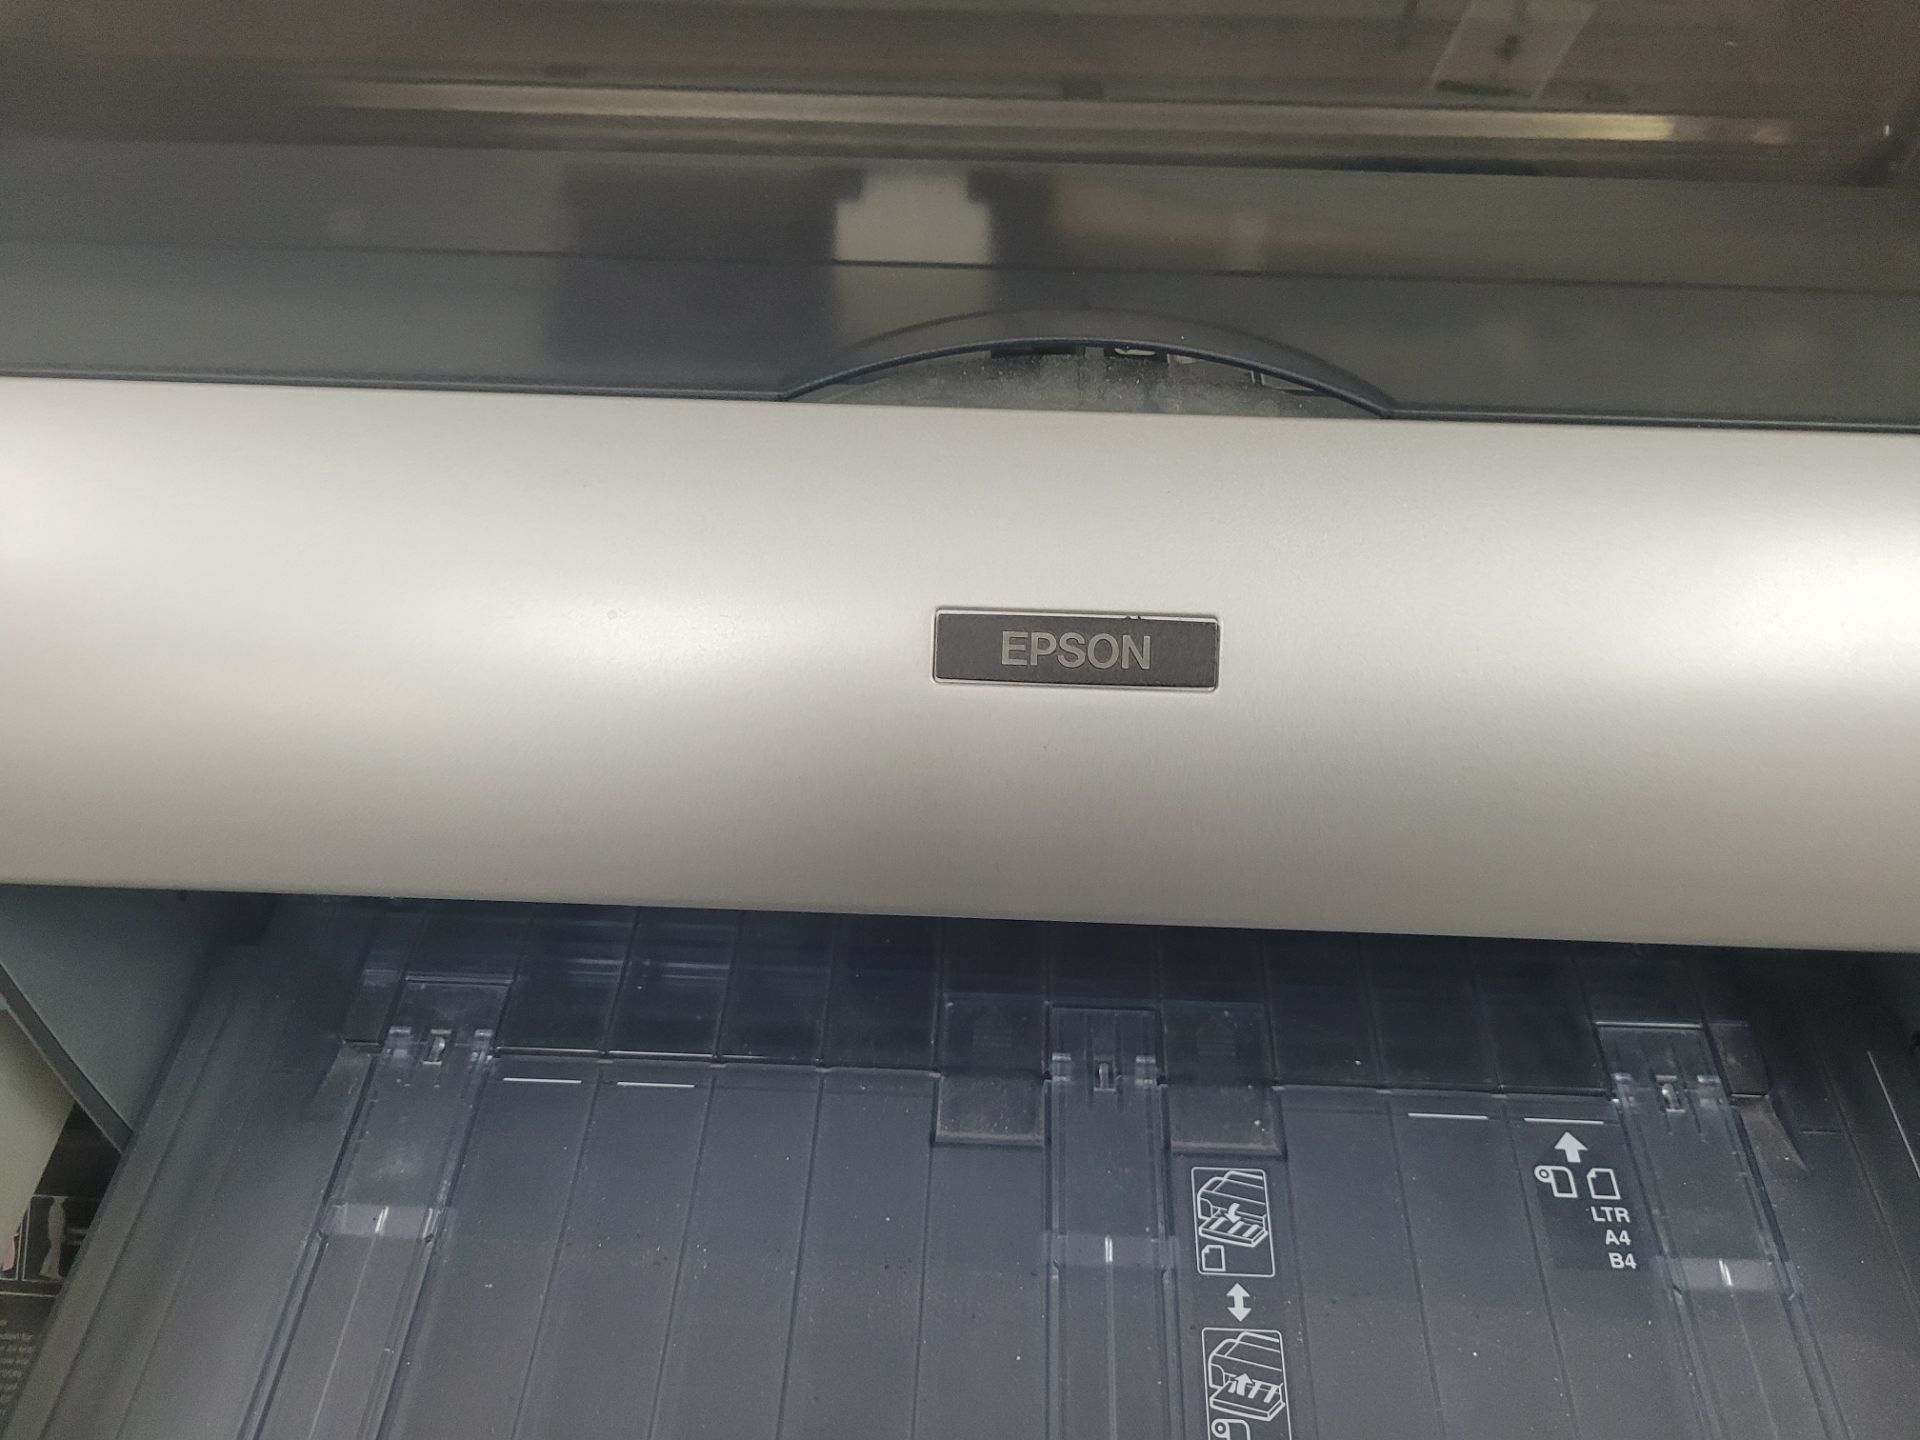 EPSON mod. Stylus Pro 4800 Large Format Inkjet Printer, 2880x1440 dpi, 8 cartridge, w/ manual - Image 9 of 18